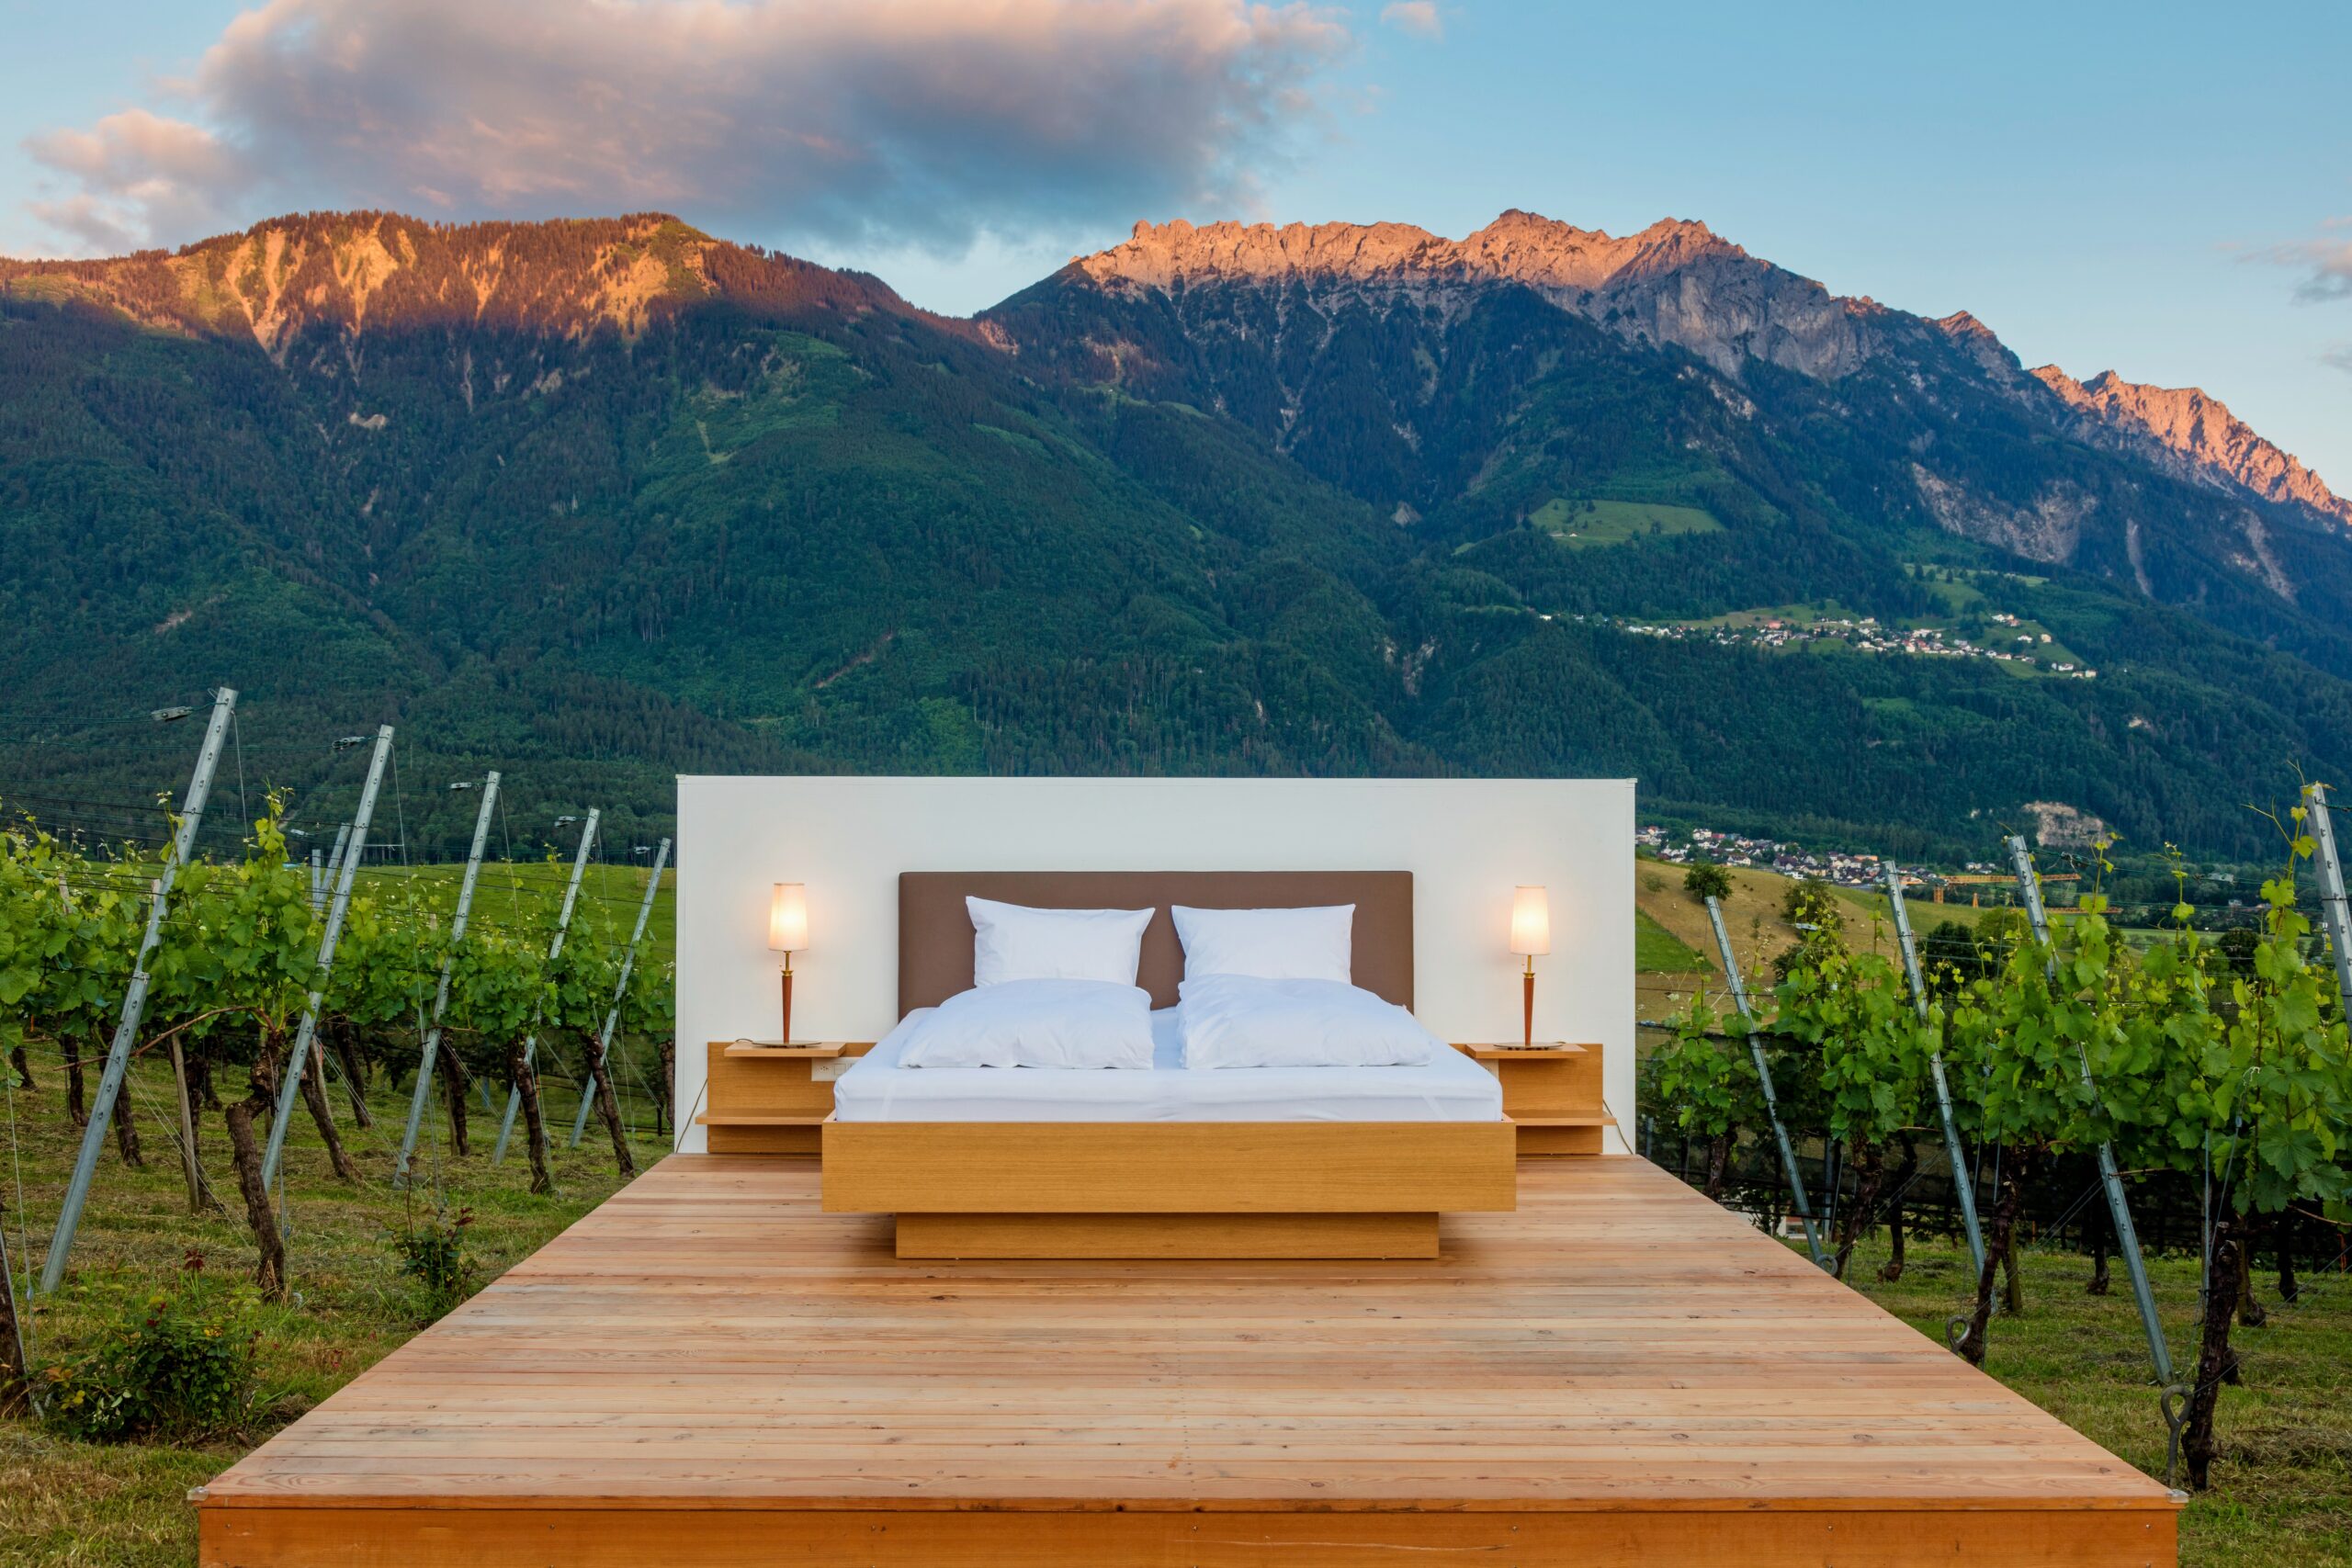 Null Stern Hotels Aka 'Zero Star Hotels' In Switzerland